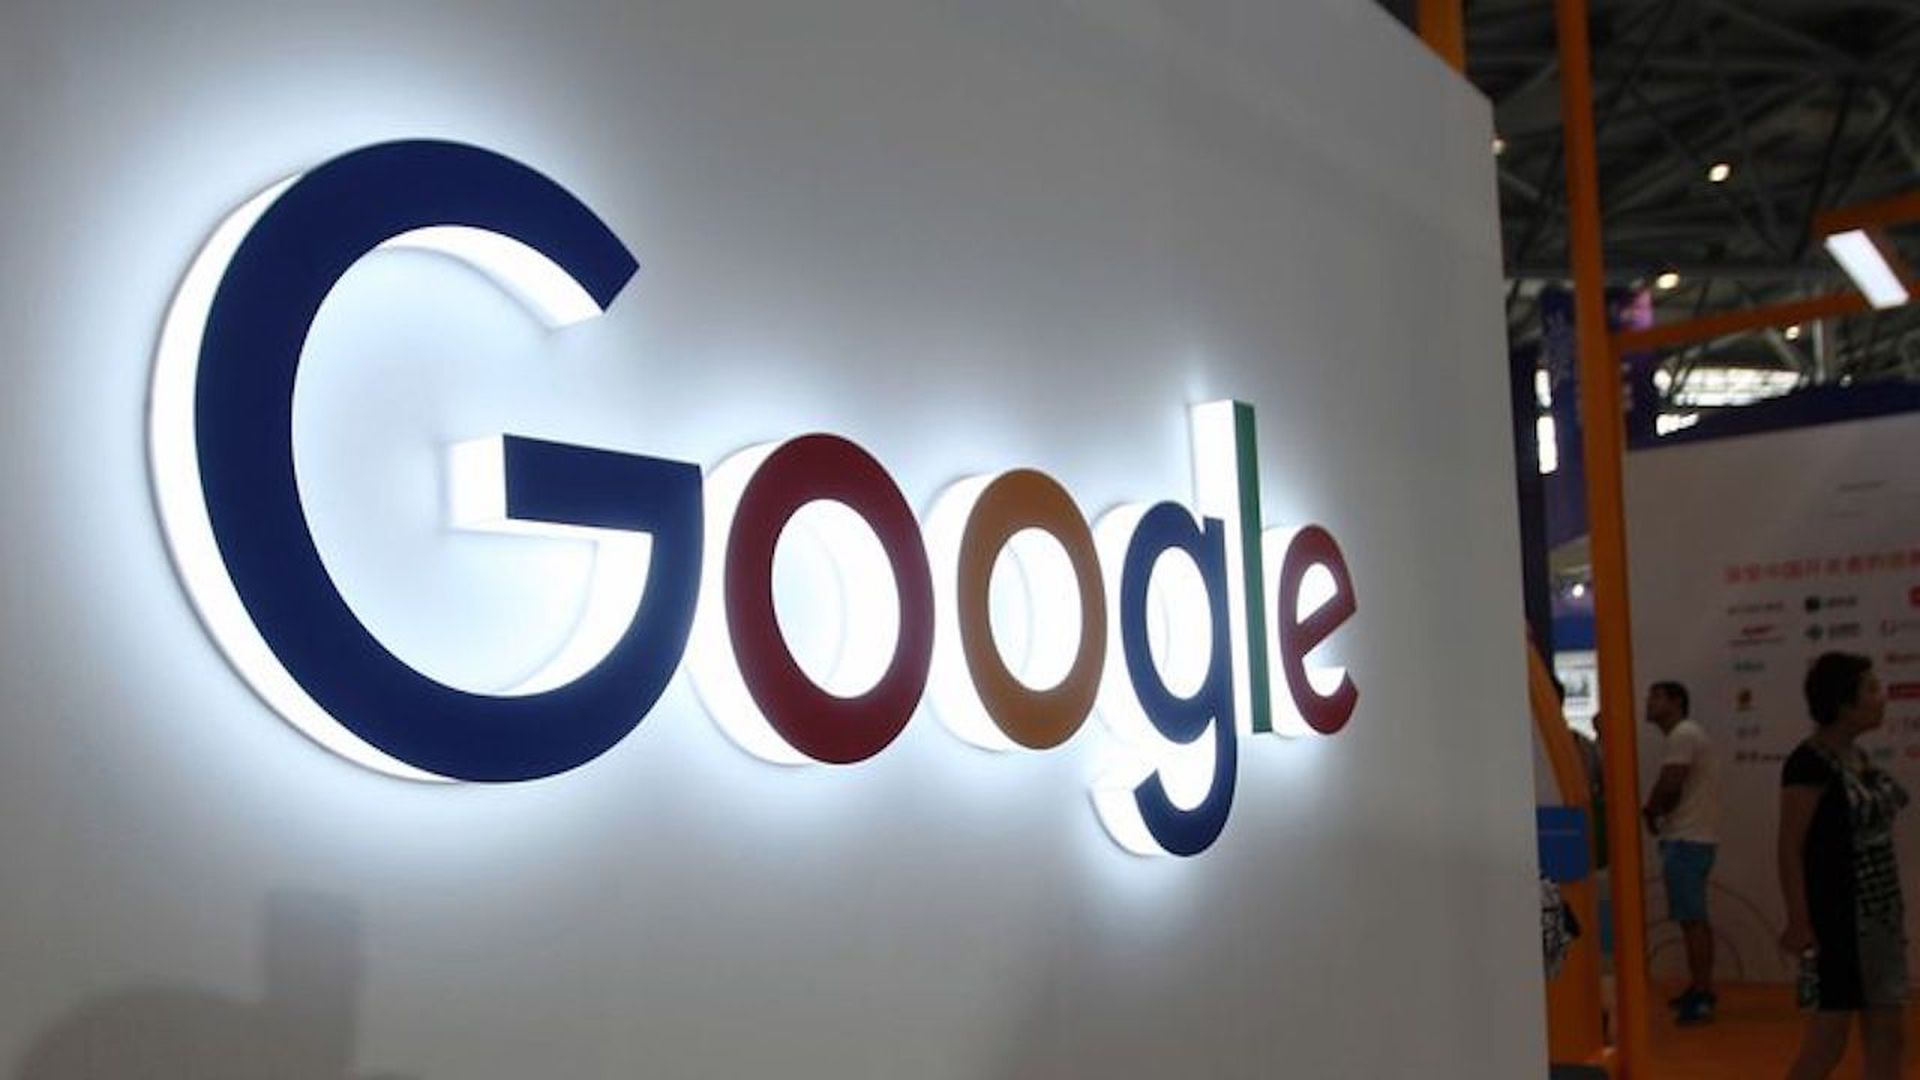 Google announces 10,000 jobs